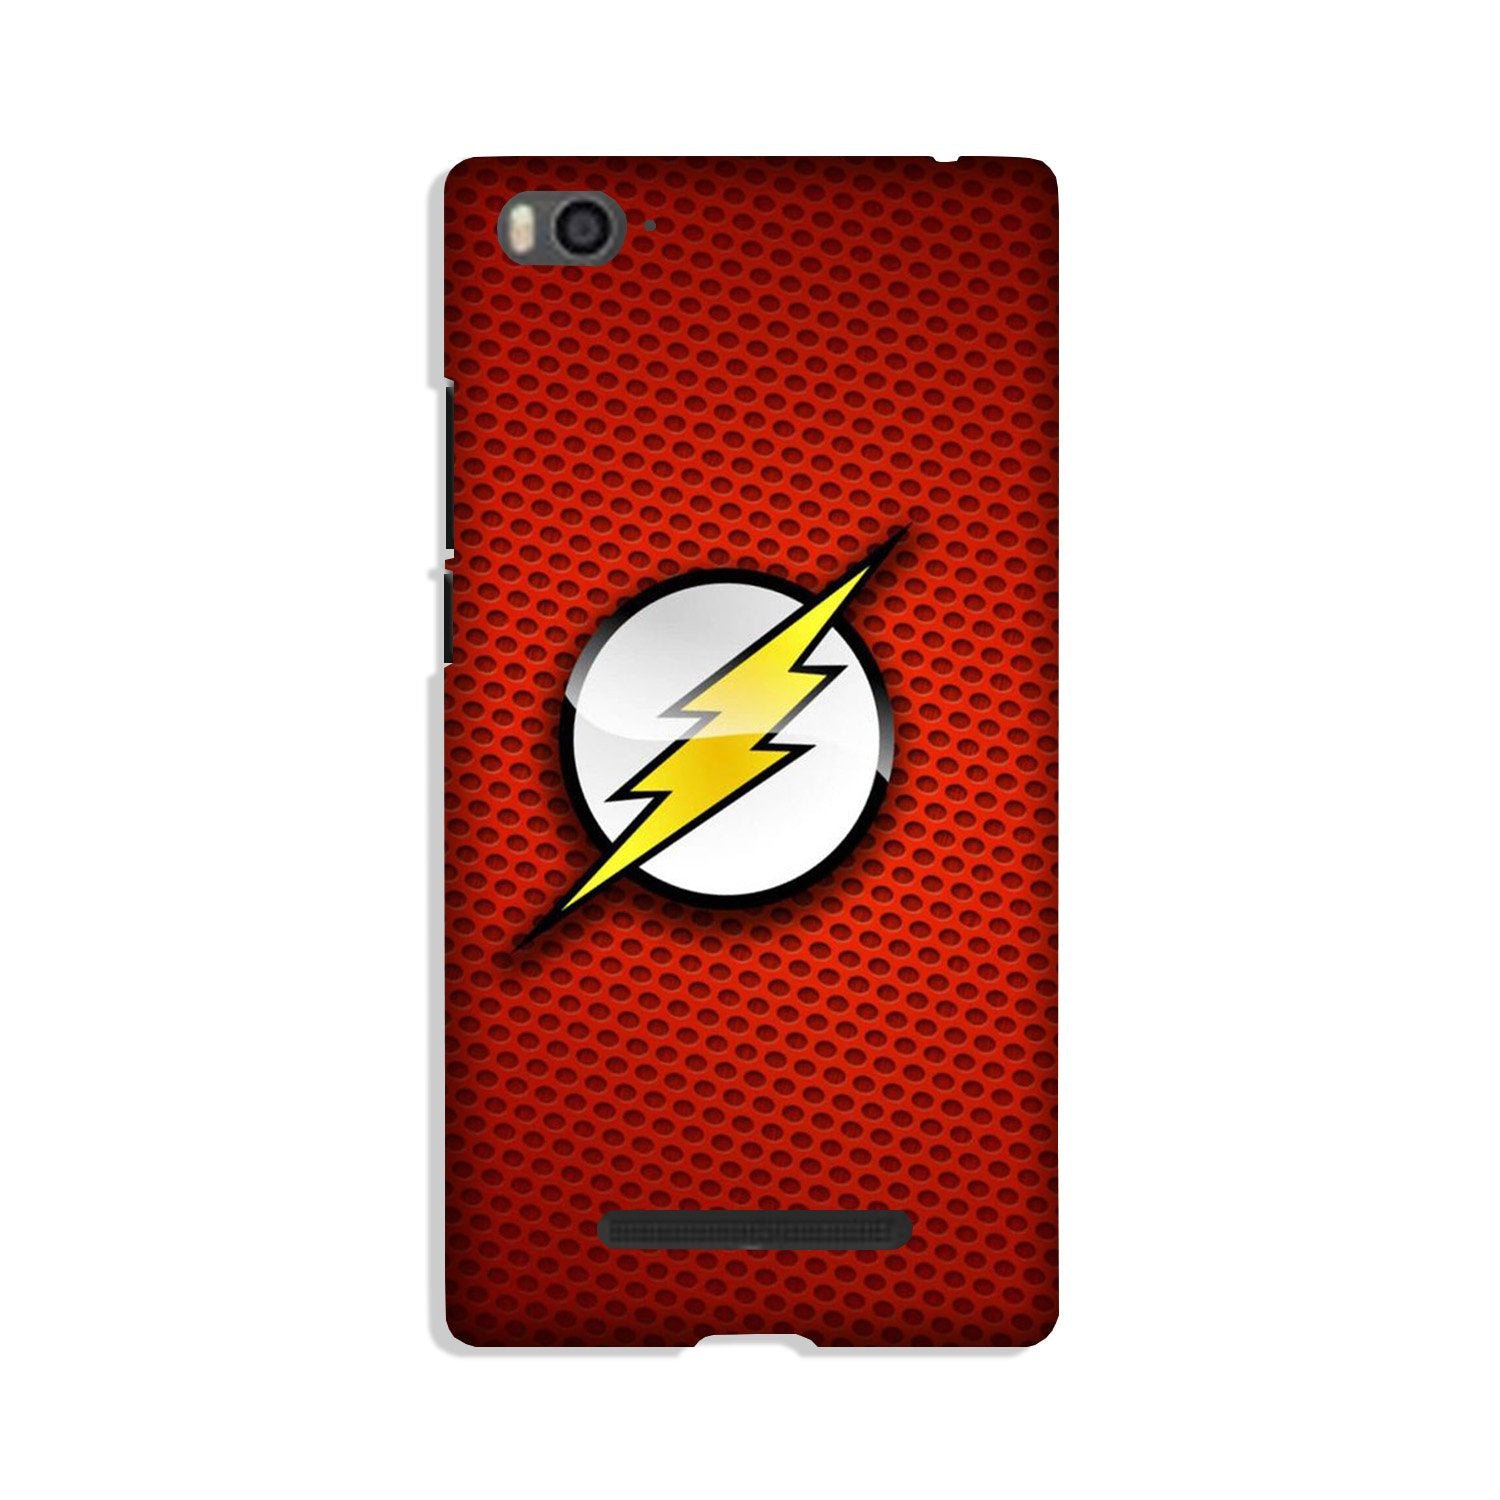 Flash Case for Xiaomi Mi 4i (Design No. 252)